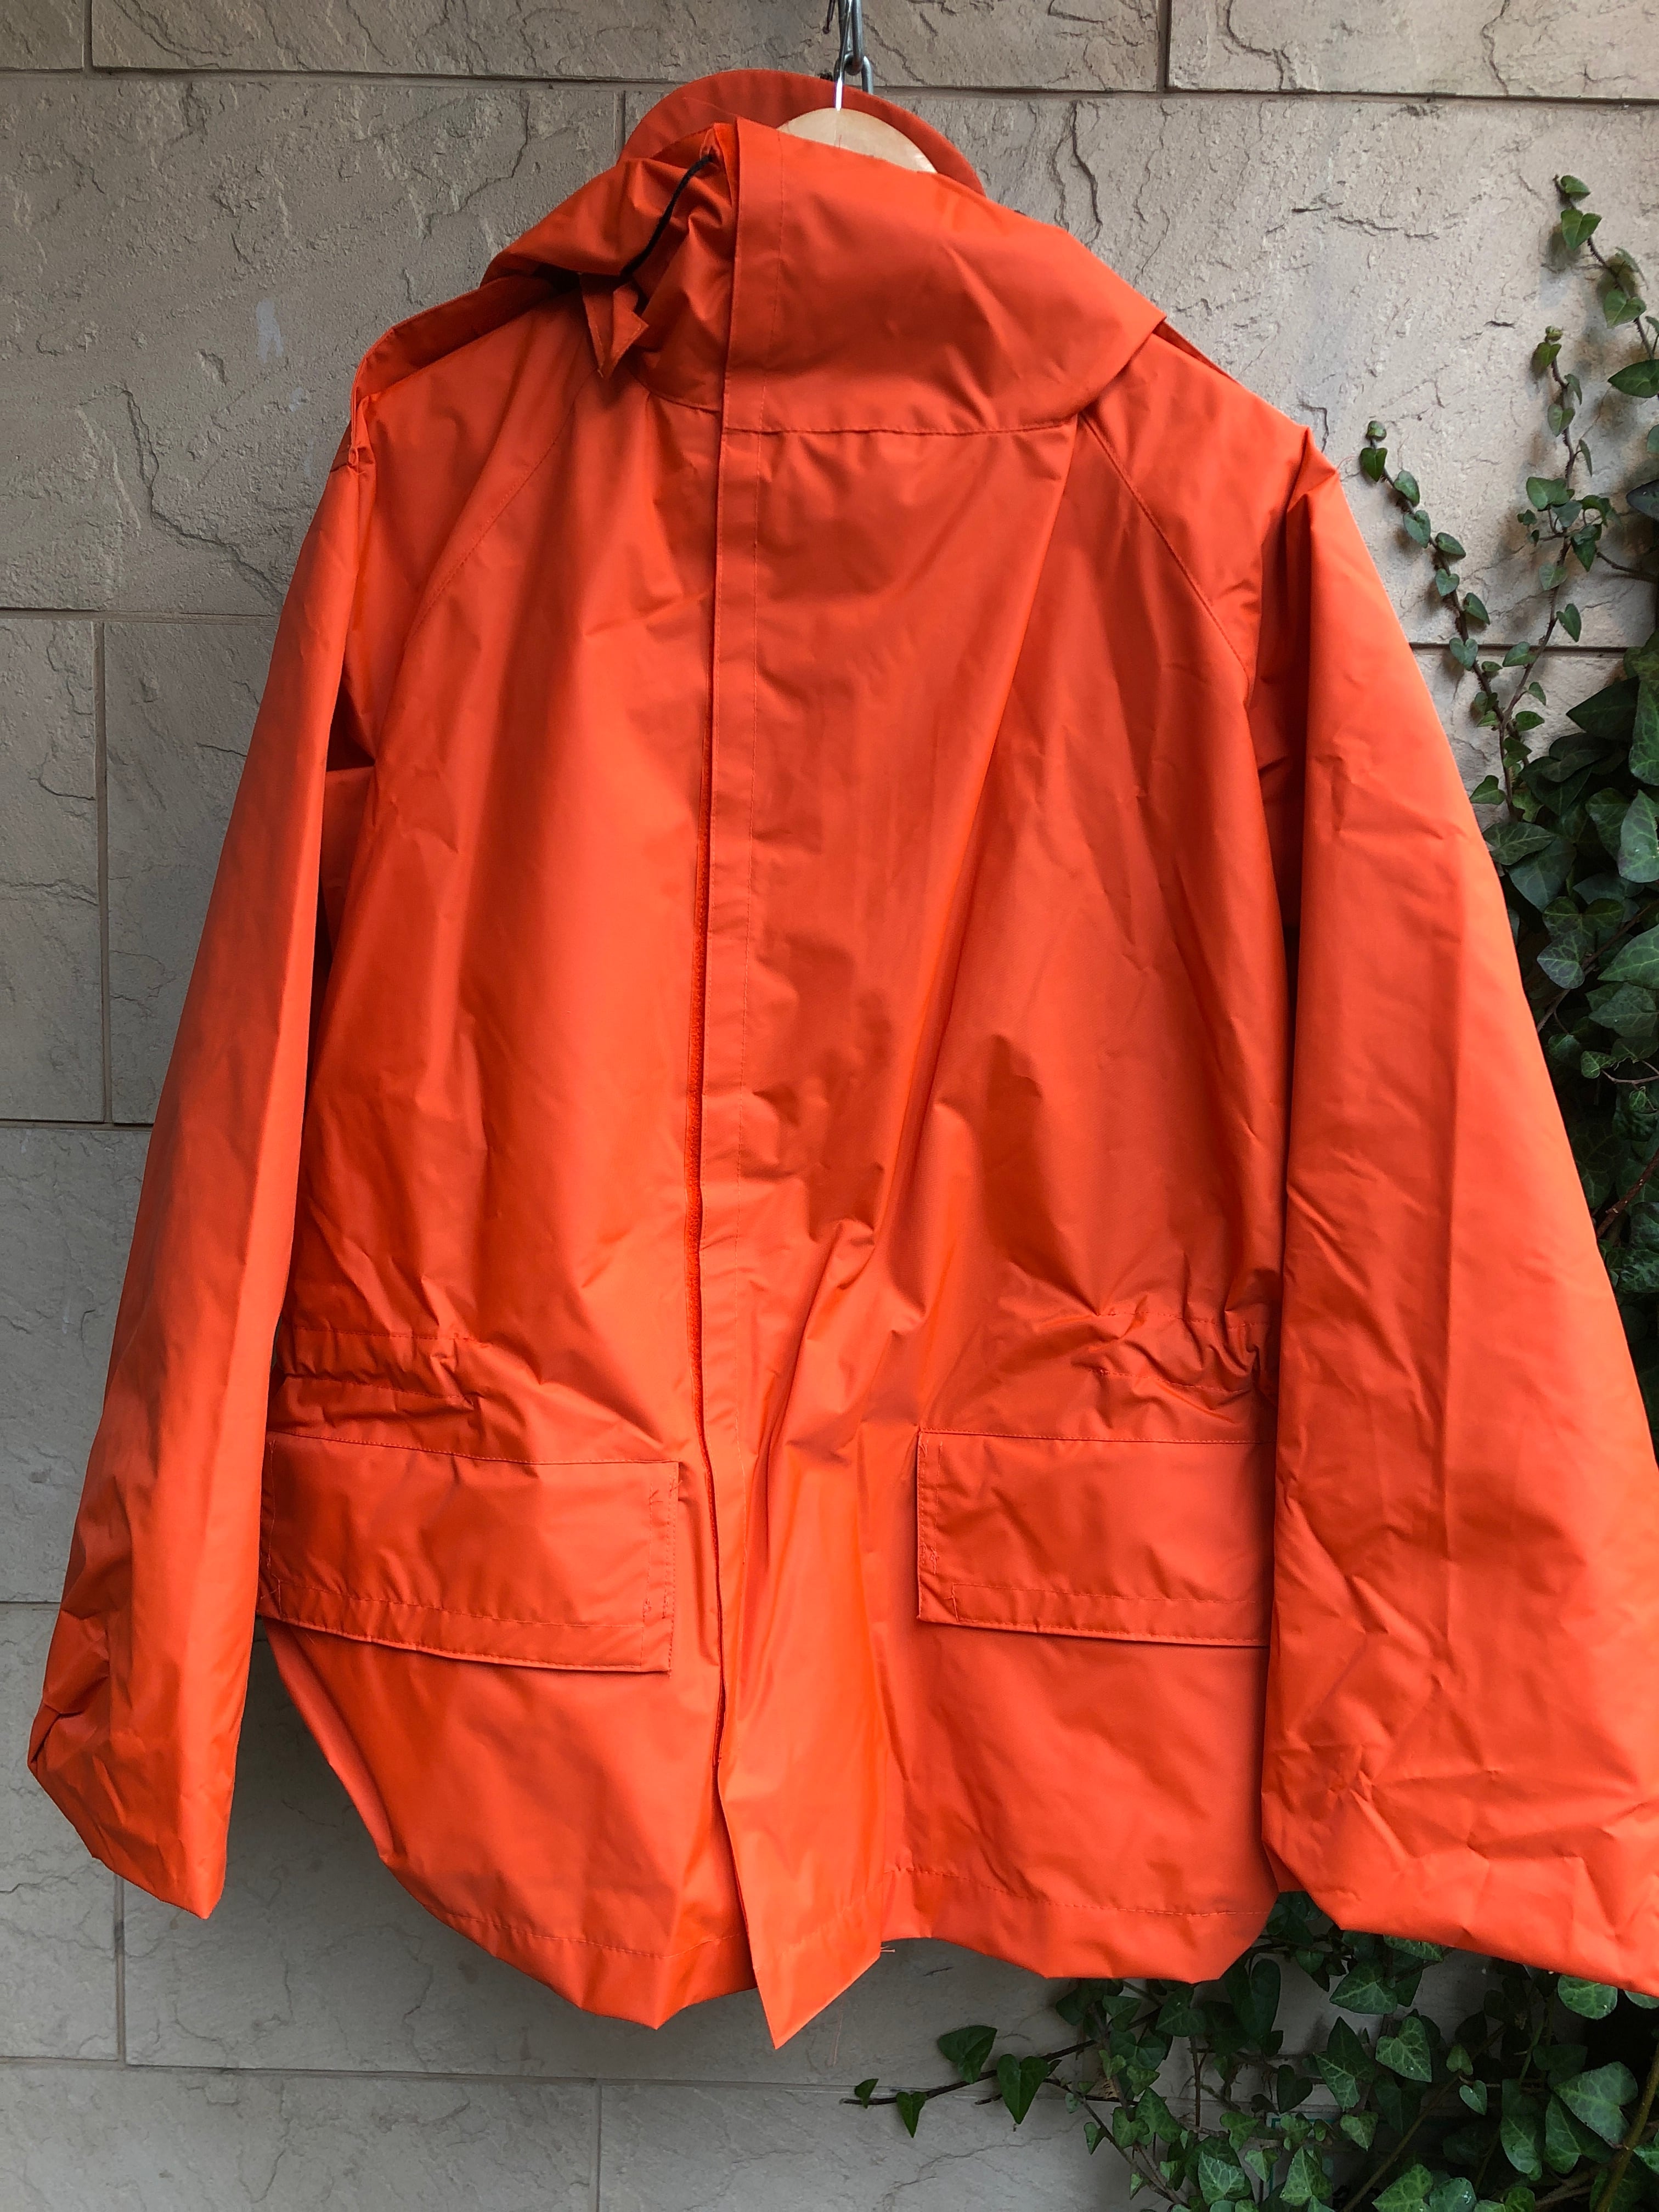 Deadstock Old Belgium navy foul weather jacket orange color | 「BRACKETS 」